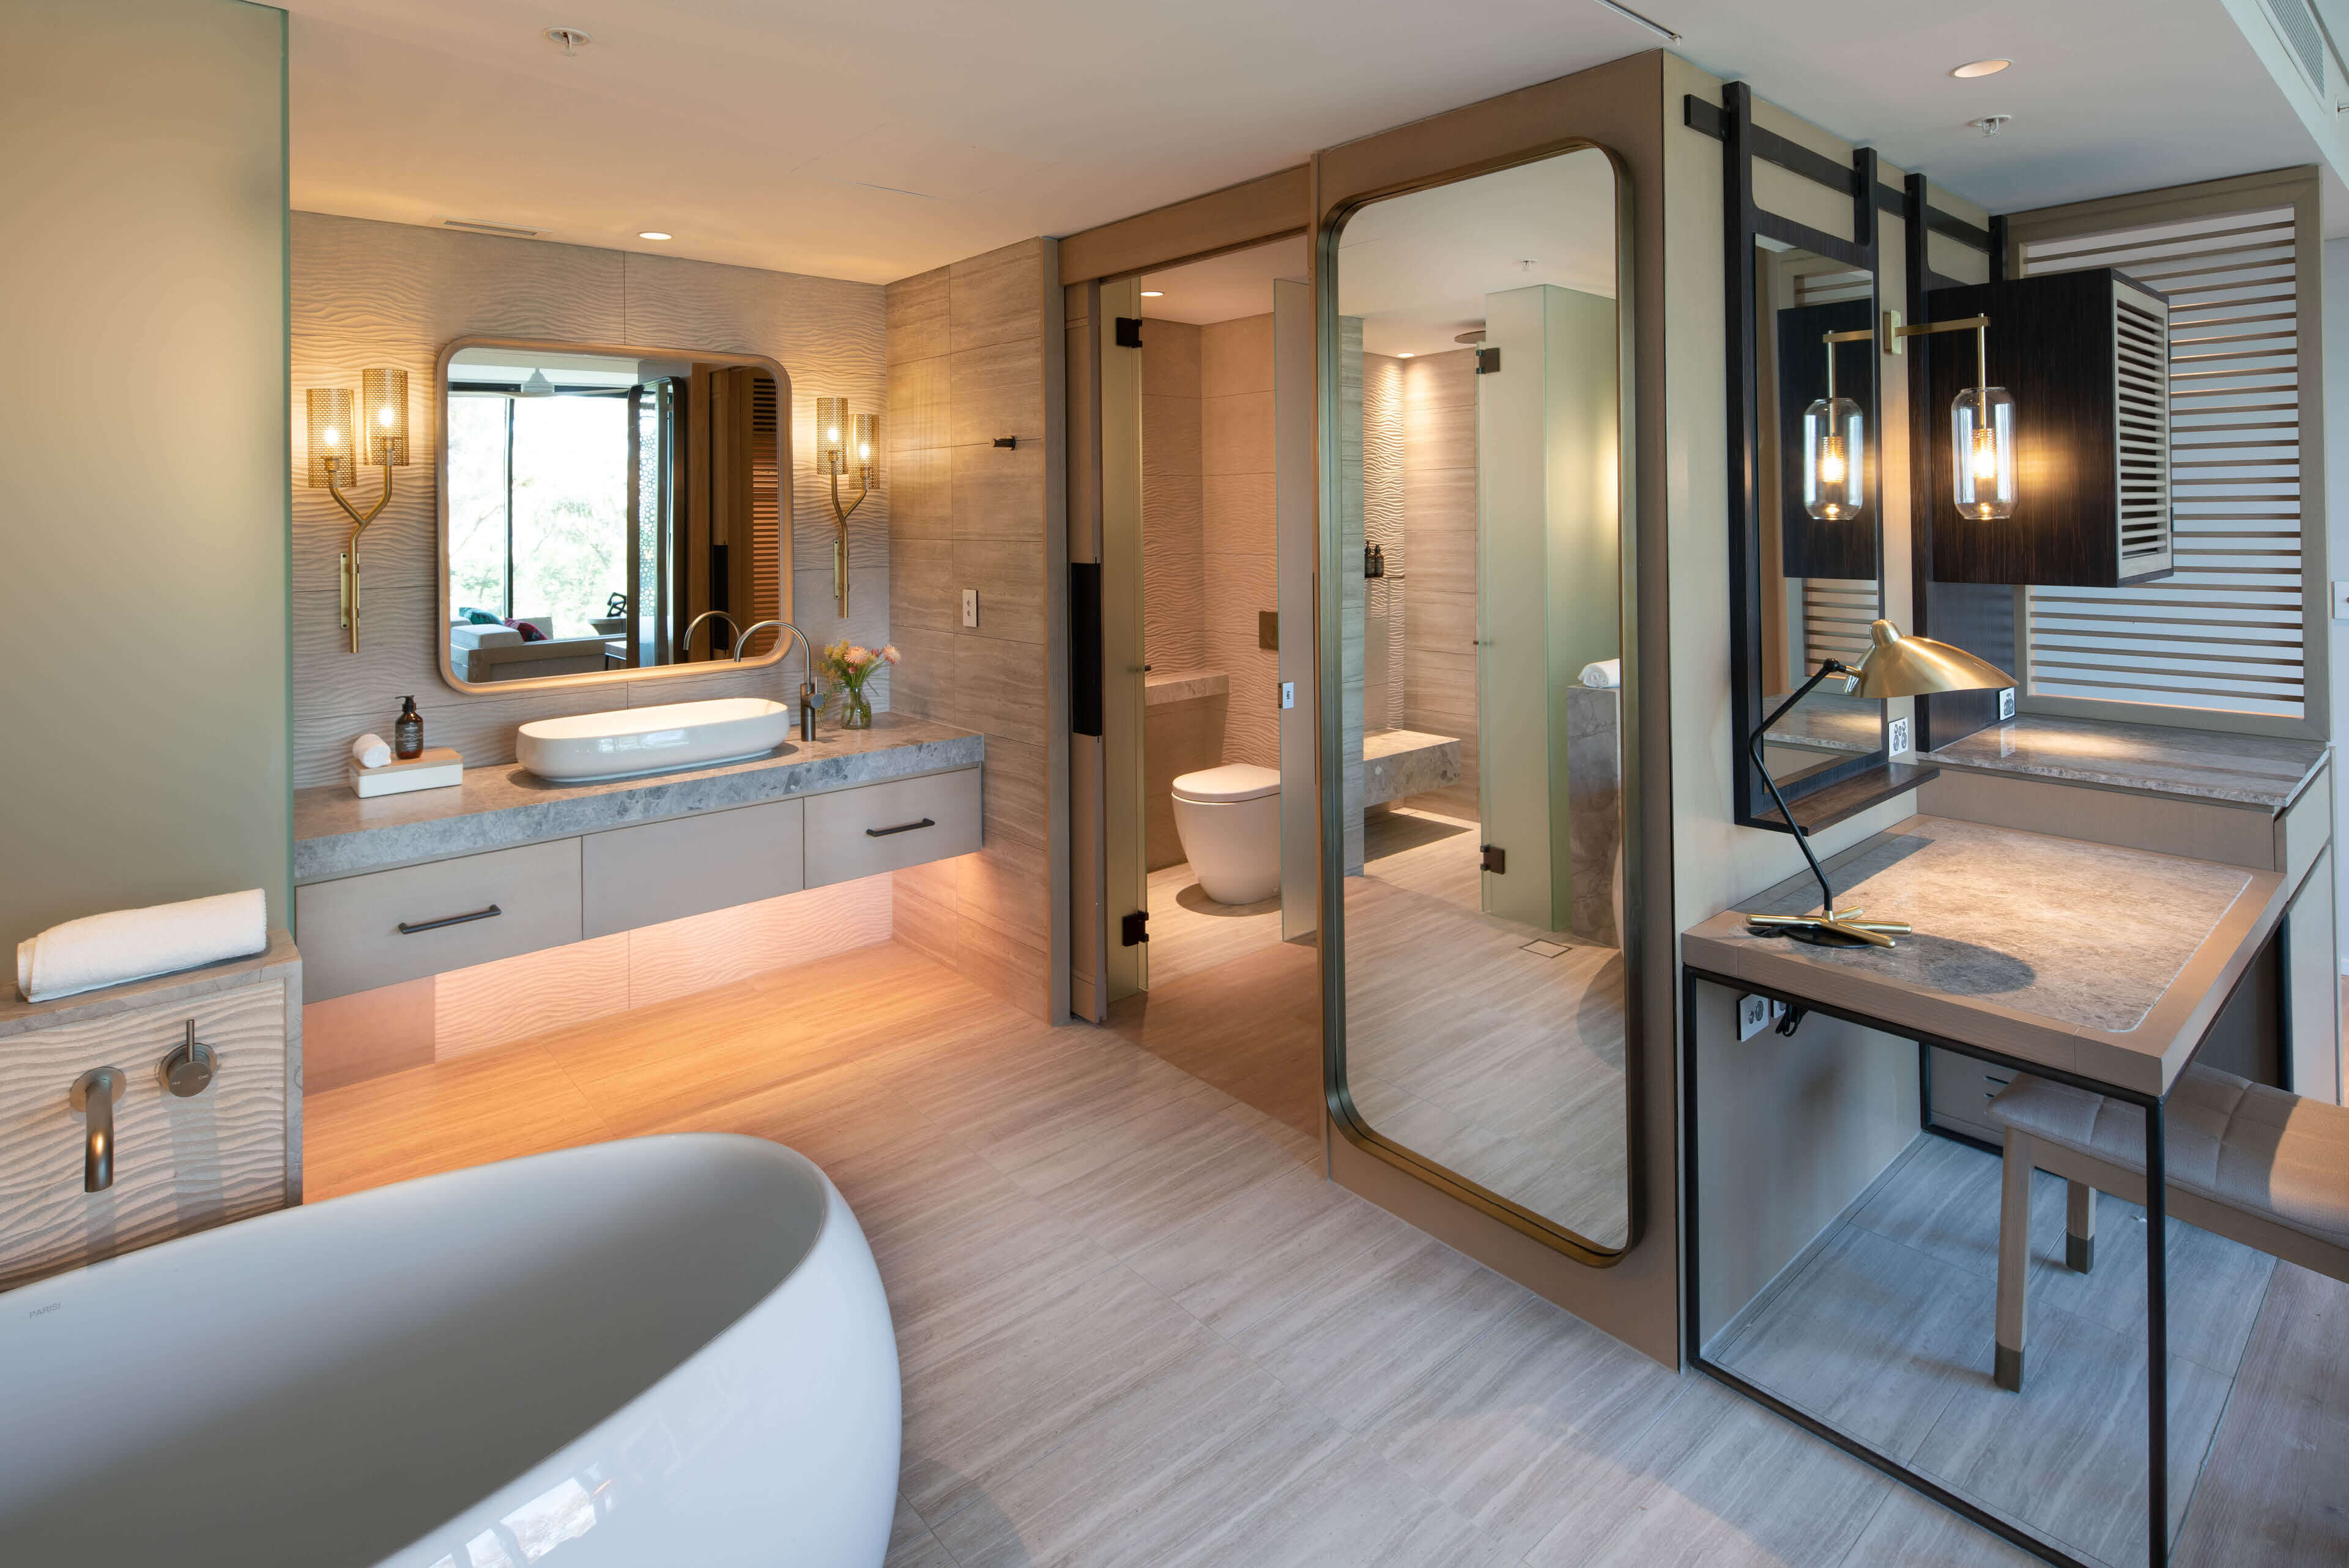 25 accommodation interior of bathroom amenities at taronga wildlife retreat sydney taylor construction hospitality